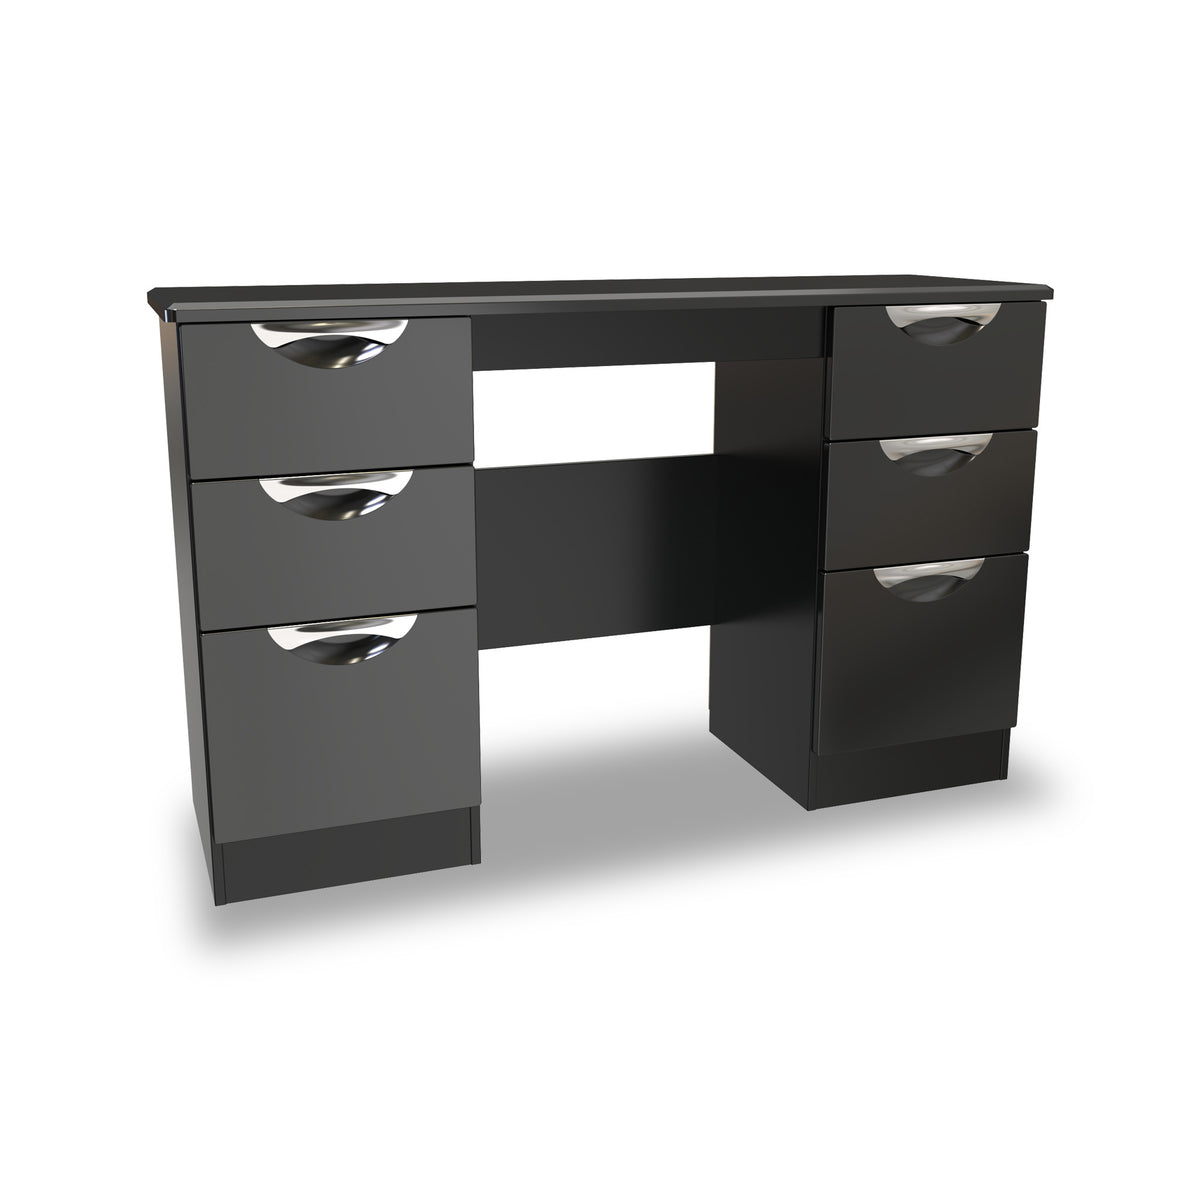 Beckett Black Gloss 6 Drawer Storage Desk from Roseland Furniture